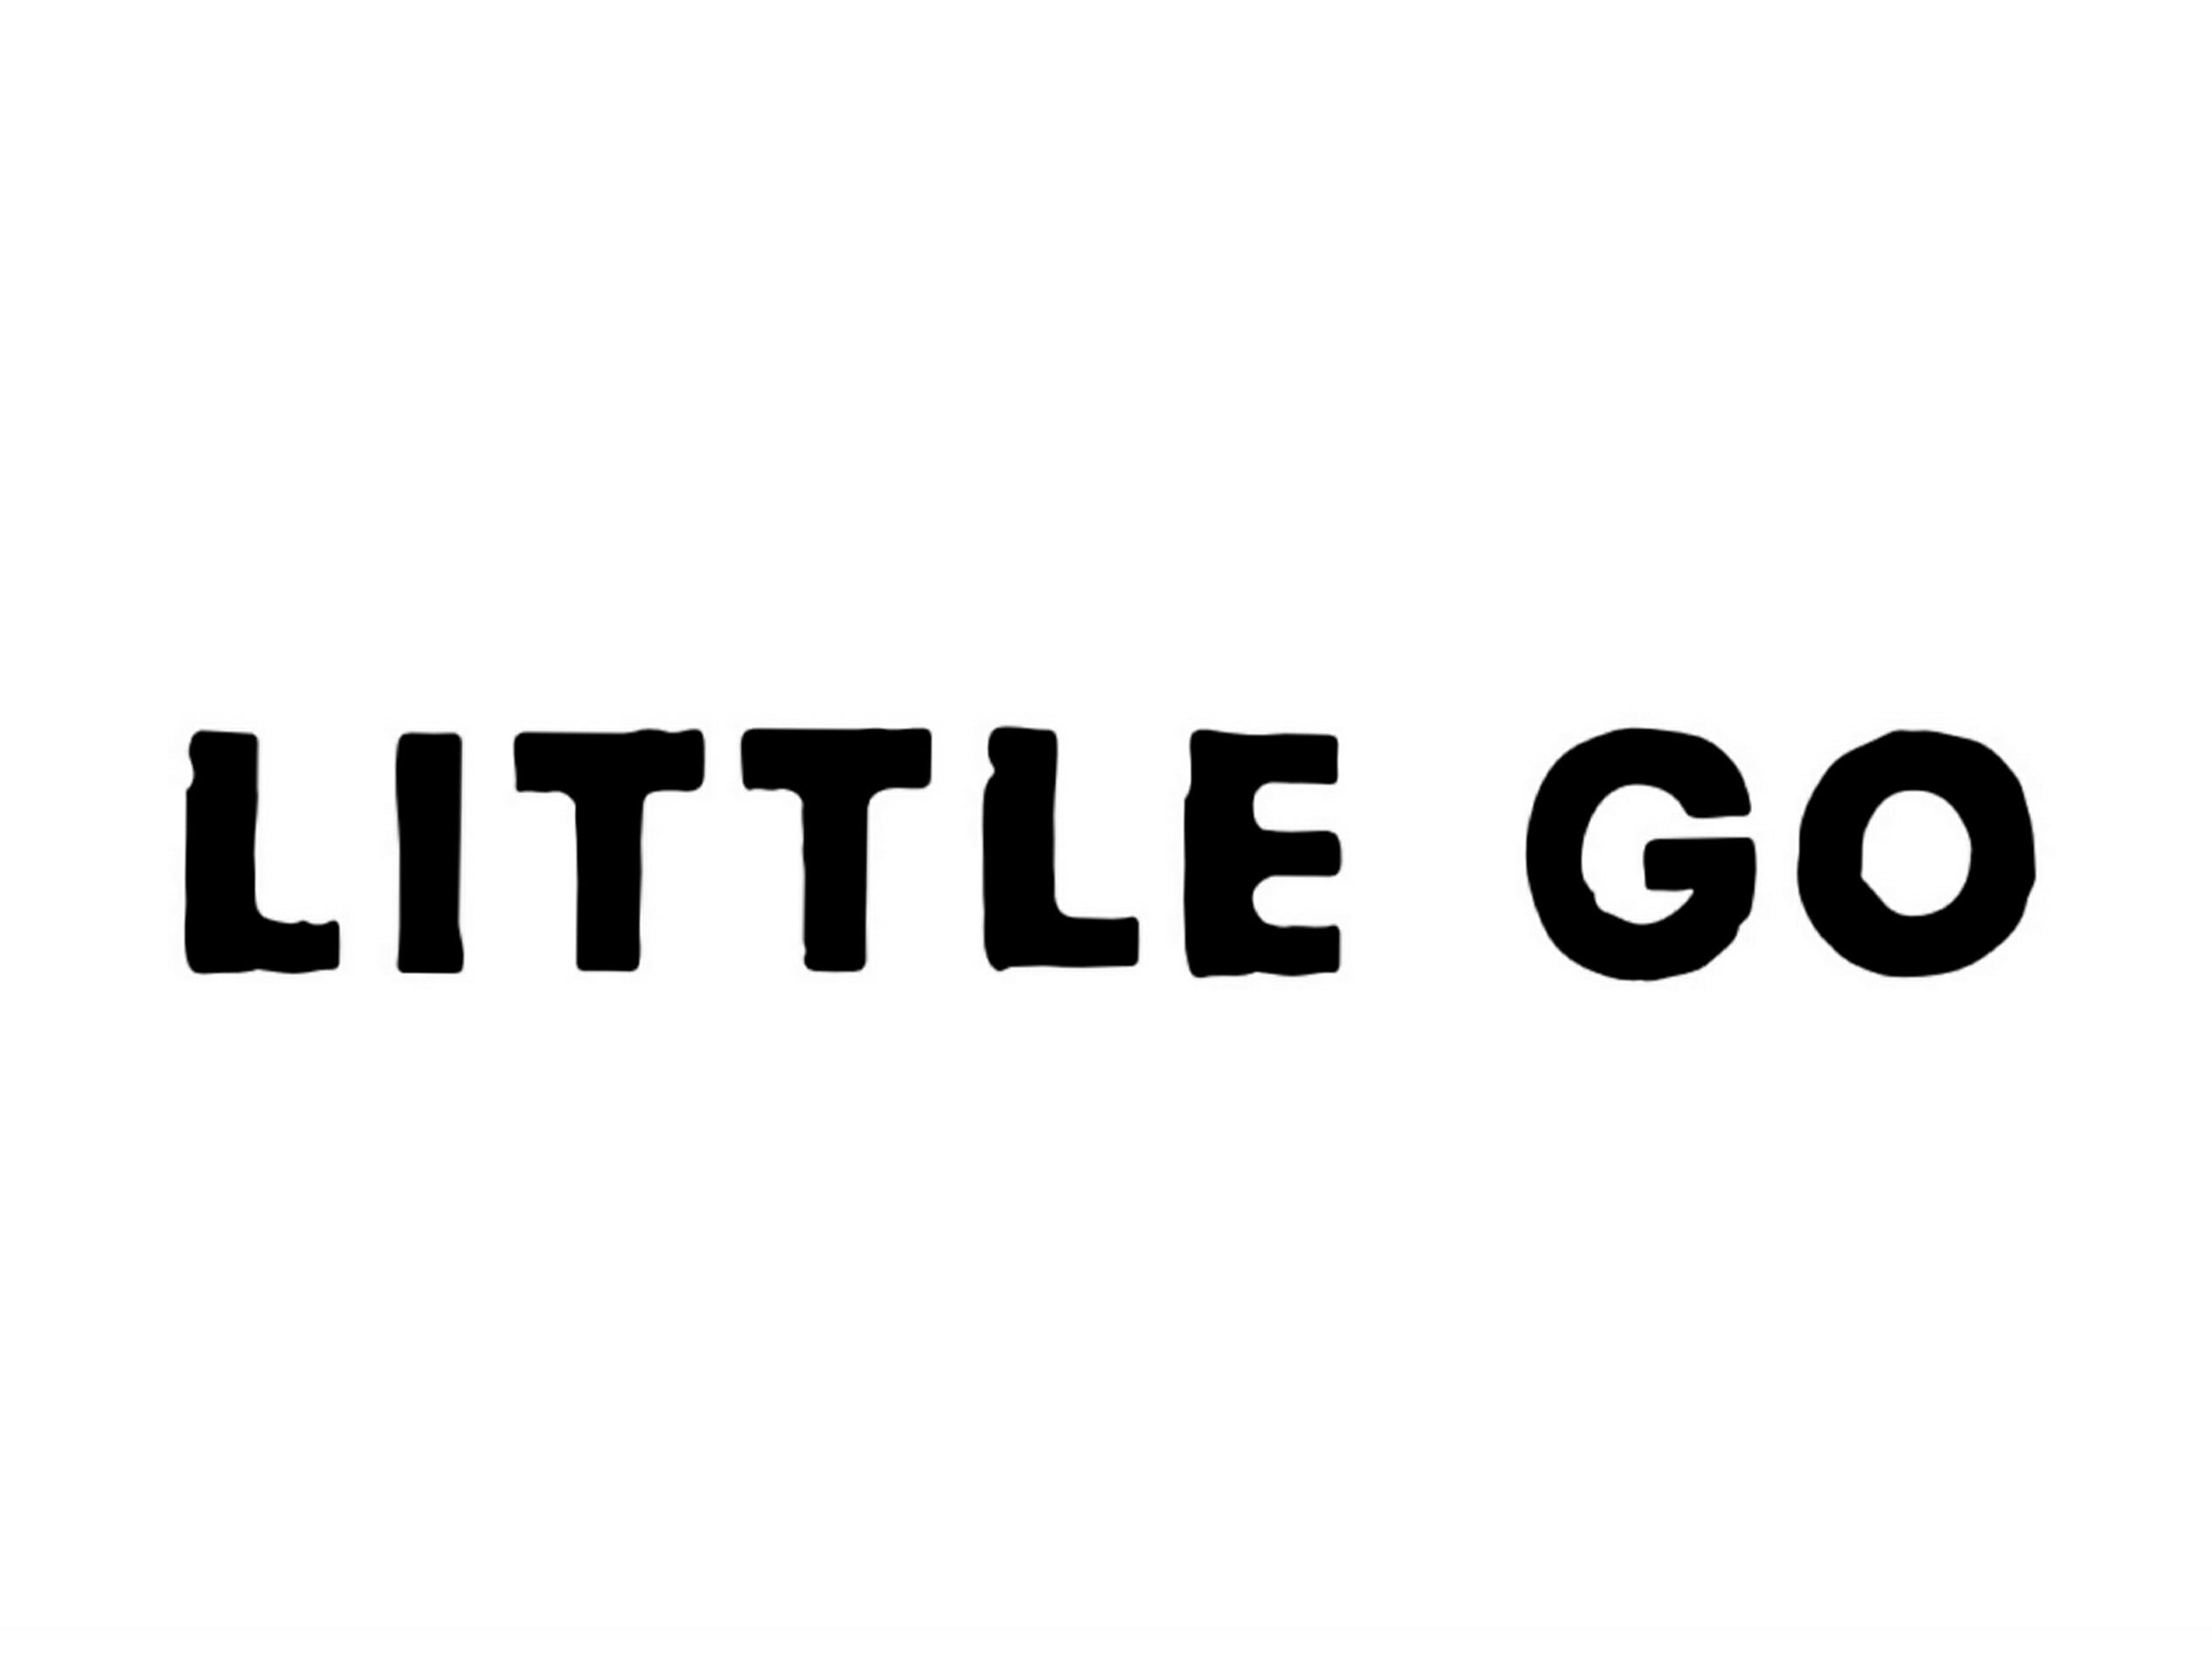 LITTLE GO